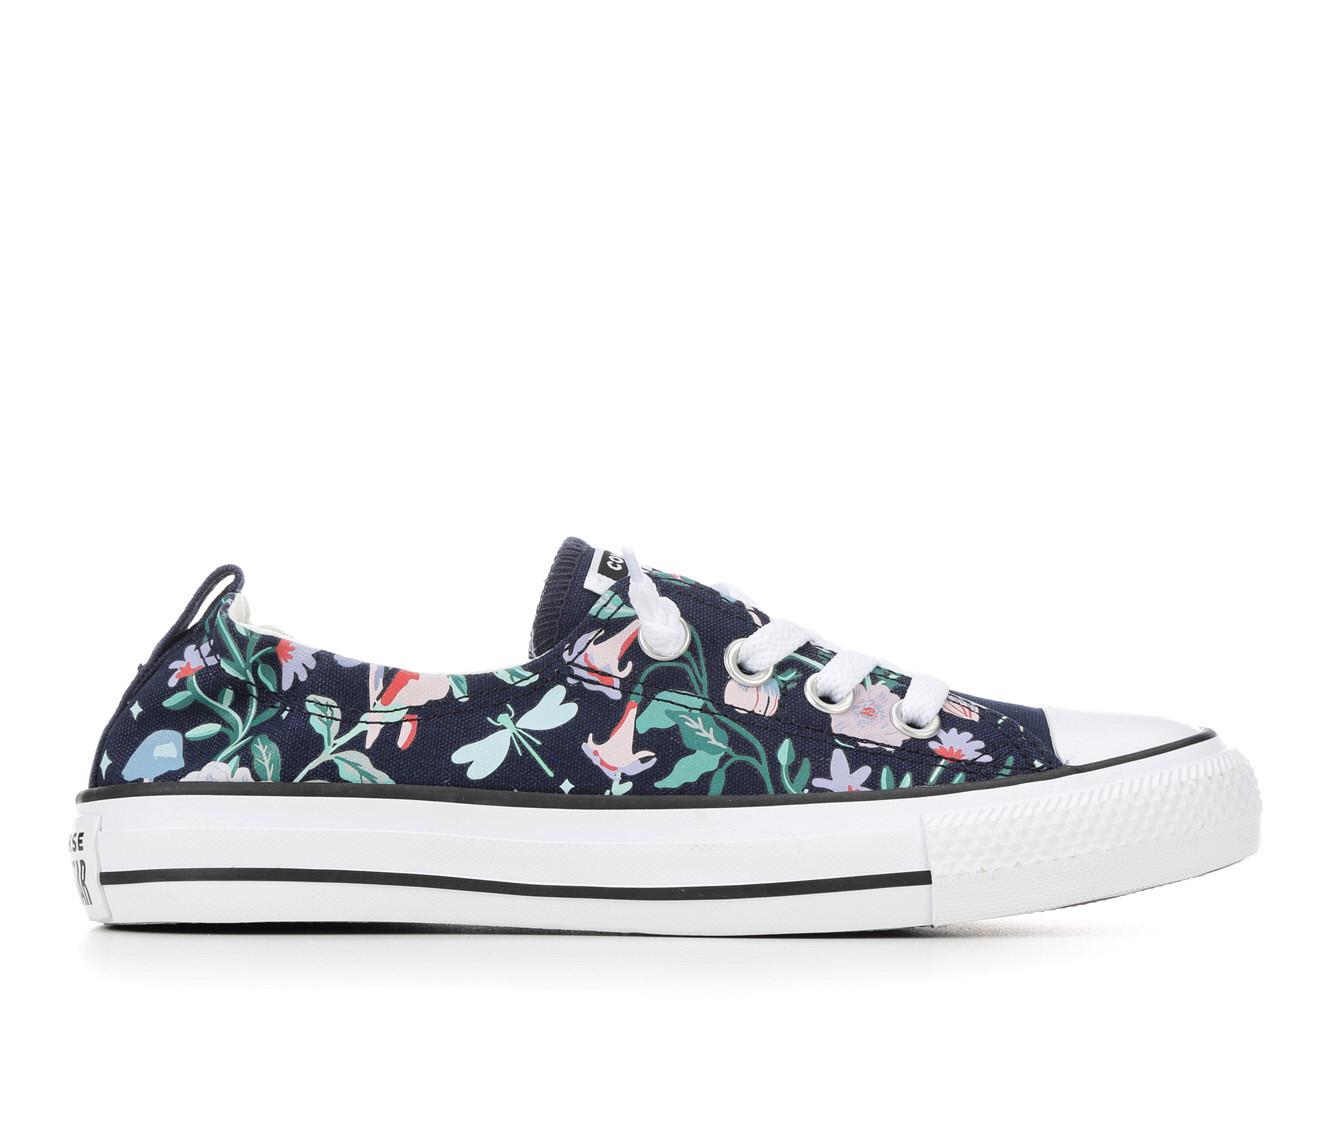 Women's Converse Chuck Taylor Shoreline Floral Sneakers